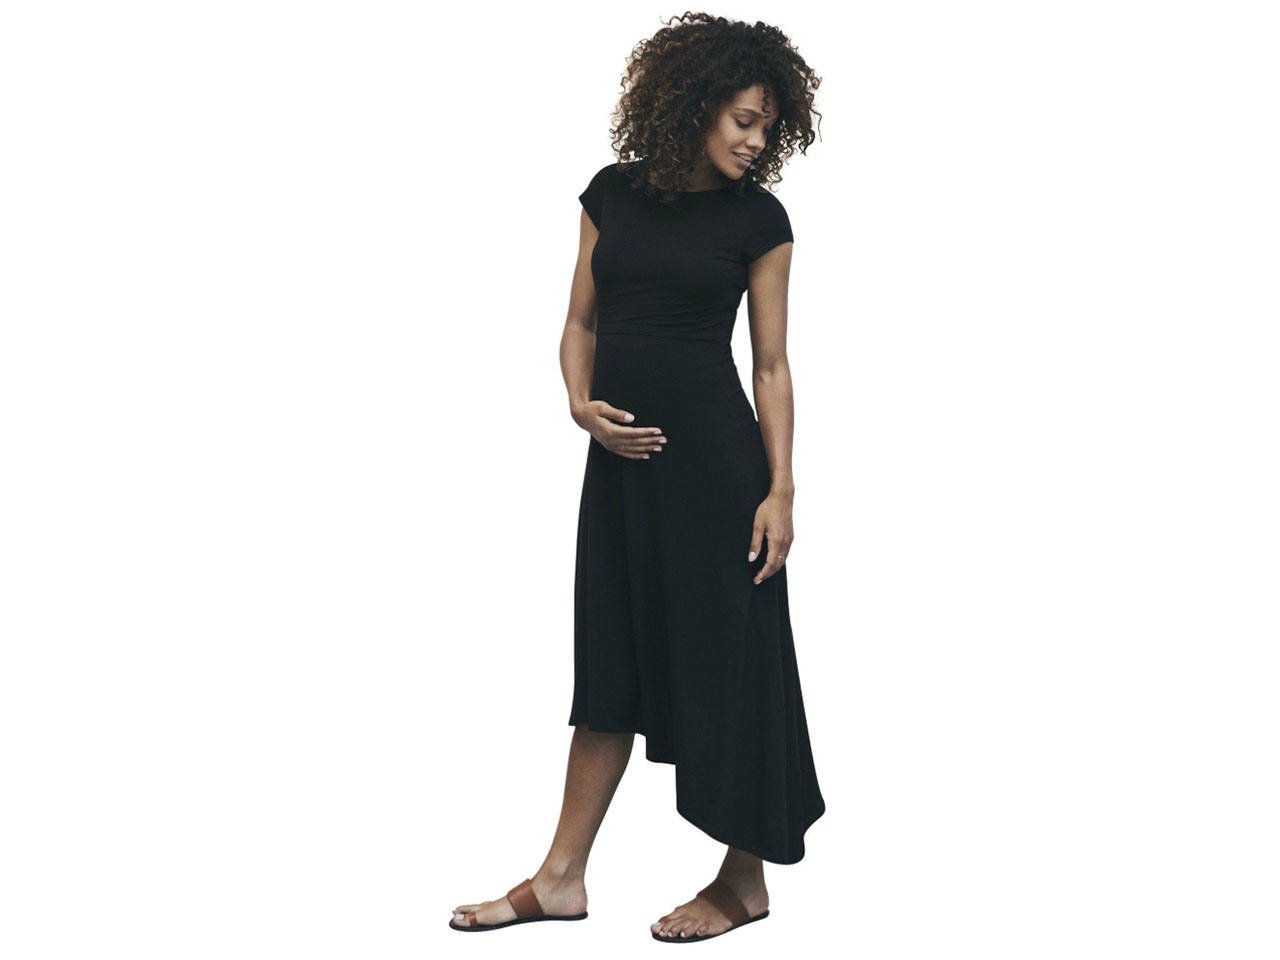 A pregnant woman wearing a black maternity dress